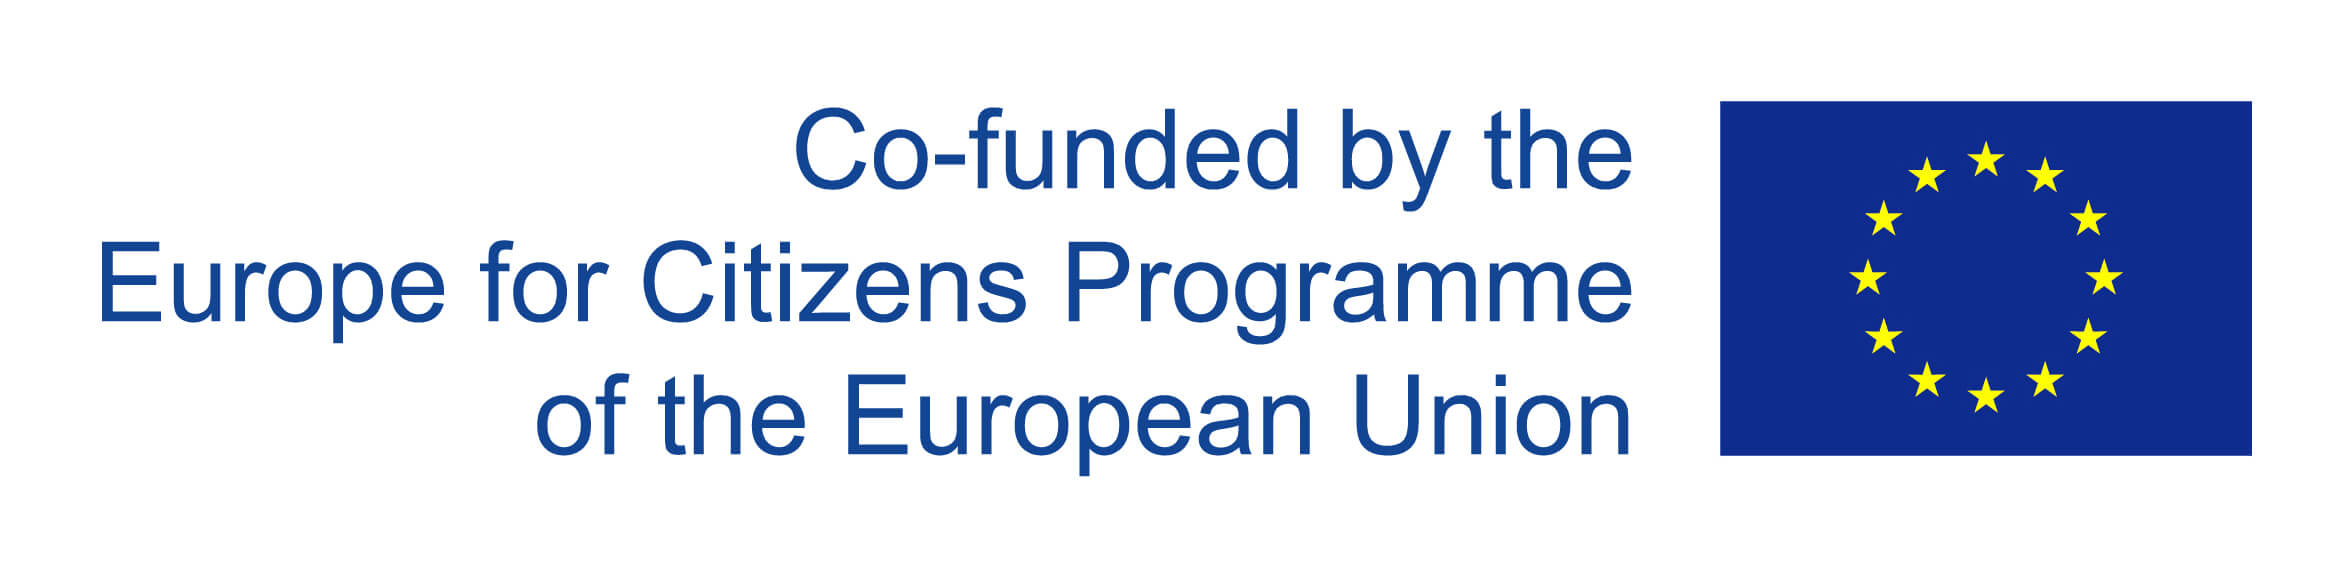 europe-citizens-funded-logo